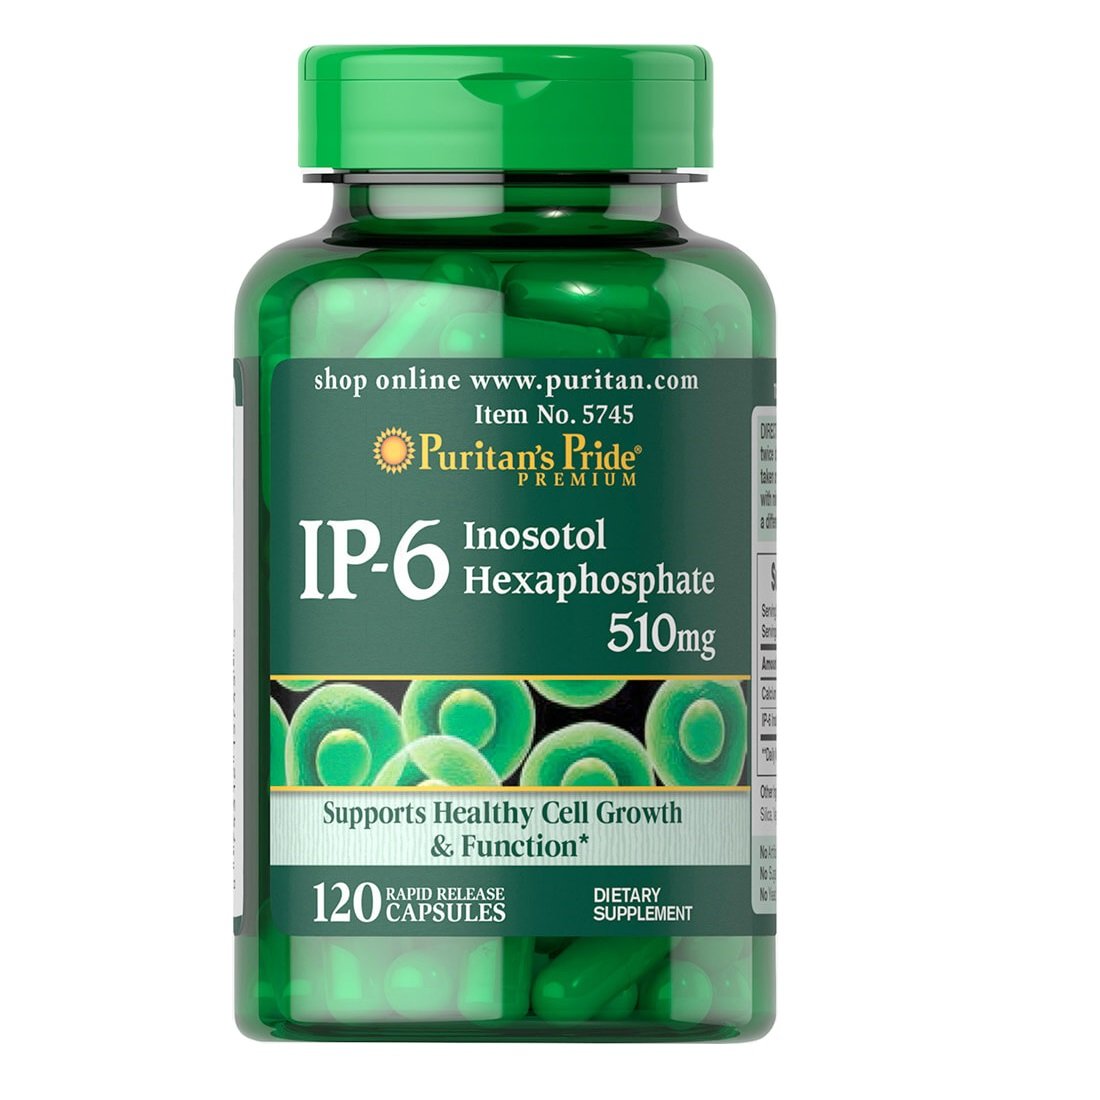 Puritan's Pride Витамины и минералы Puritan's Pride IP-6 Inositol Hexaphosphate 510 mg, 120 капсул, , 